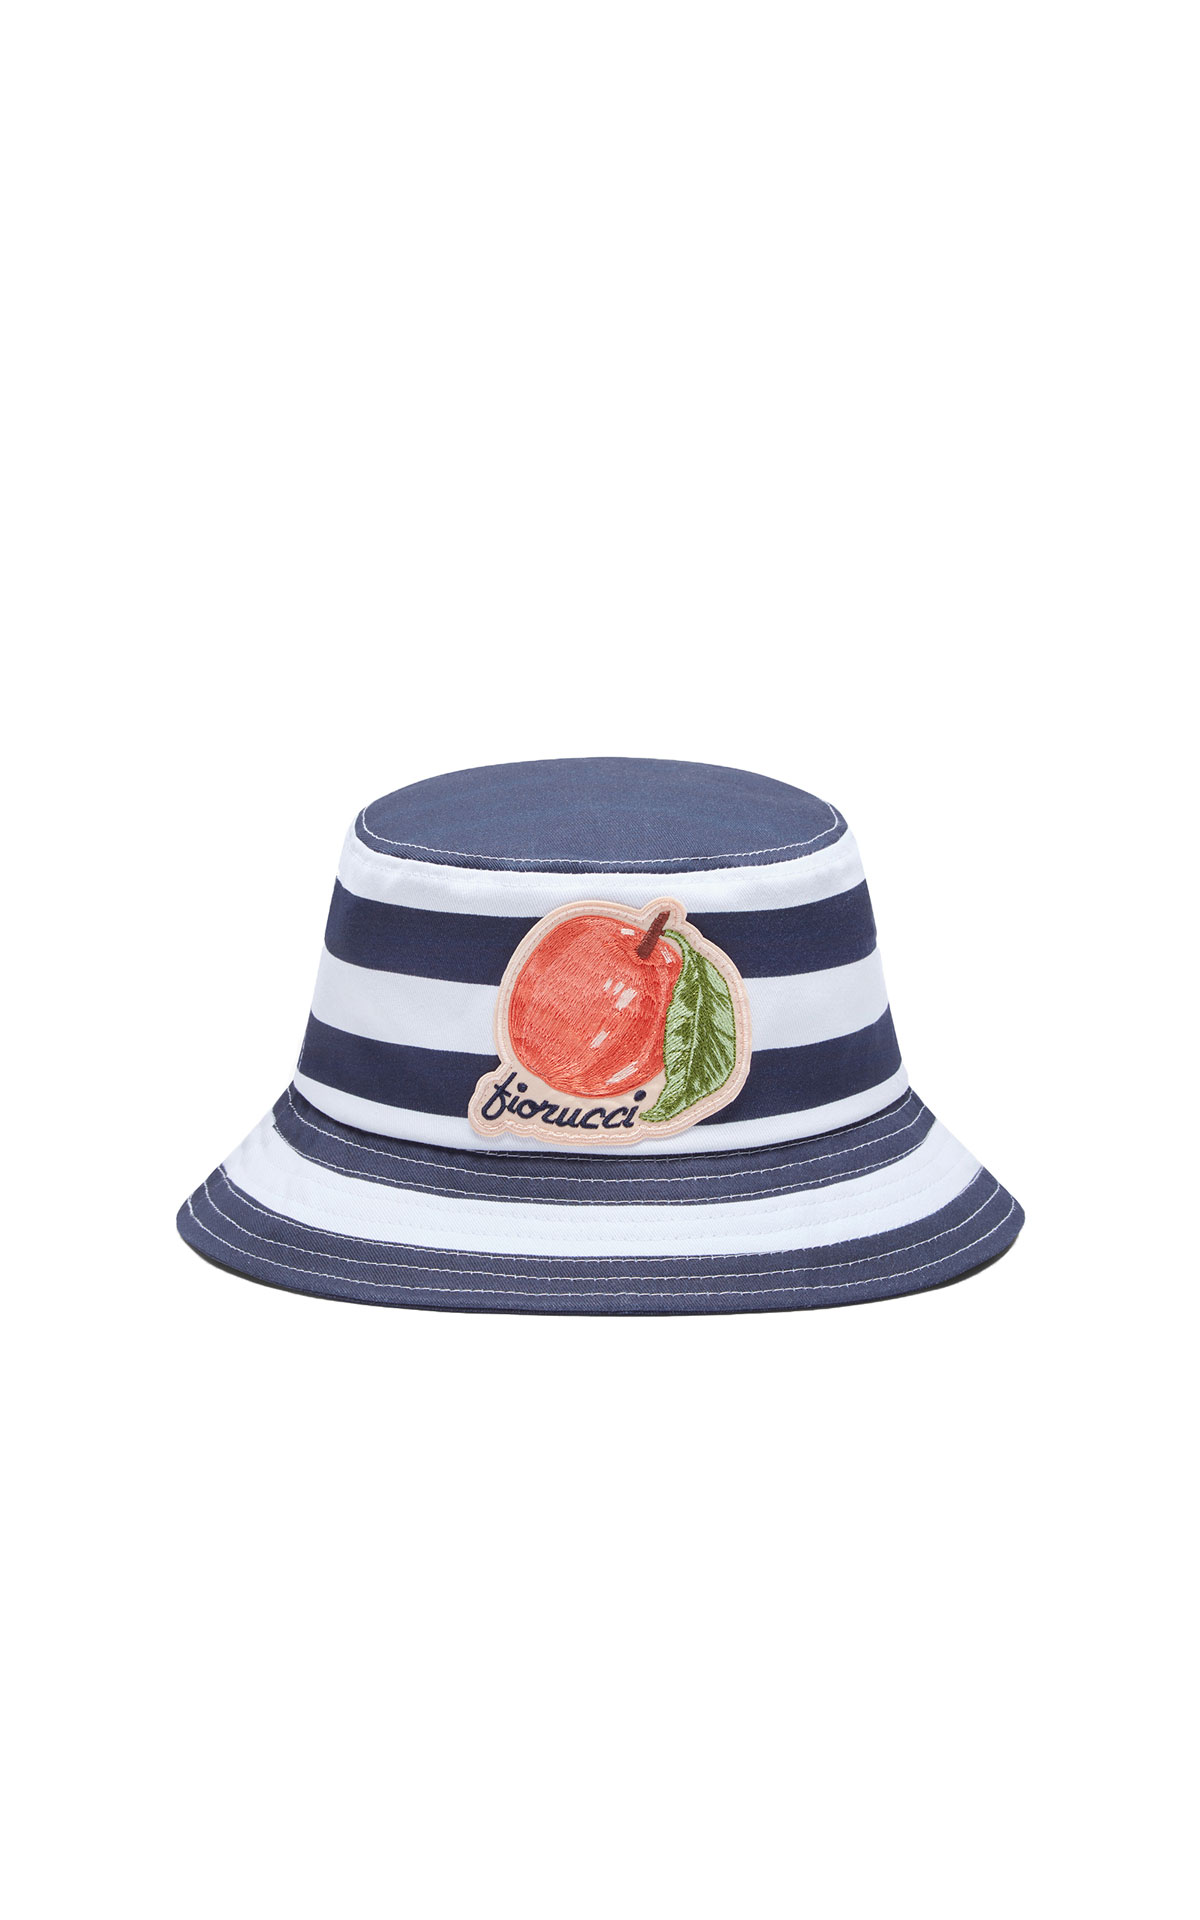 Fiorucci Cafe la pesca stripe bucket hat multi from Bicester Village